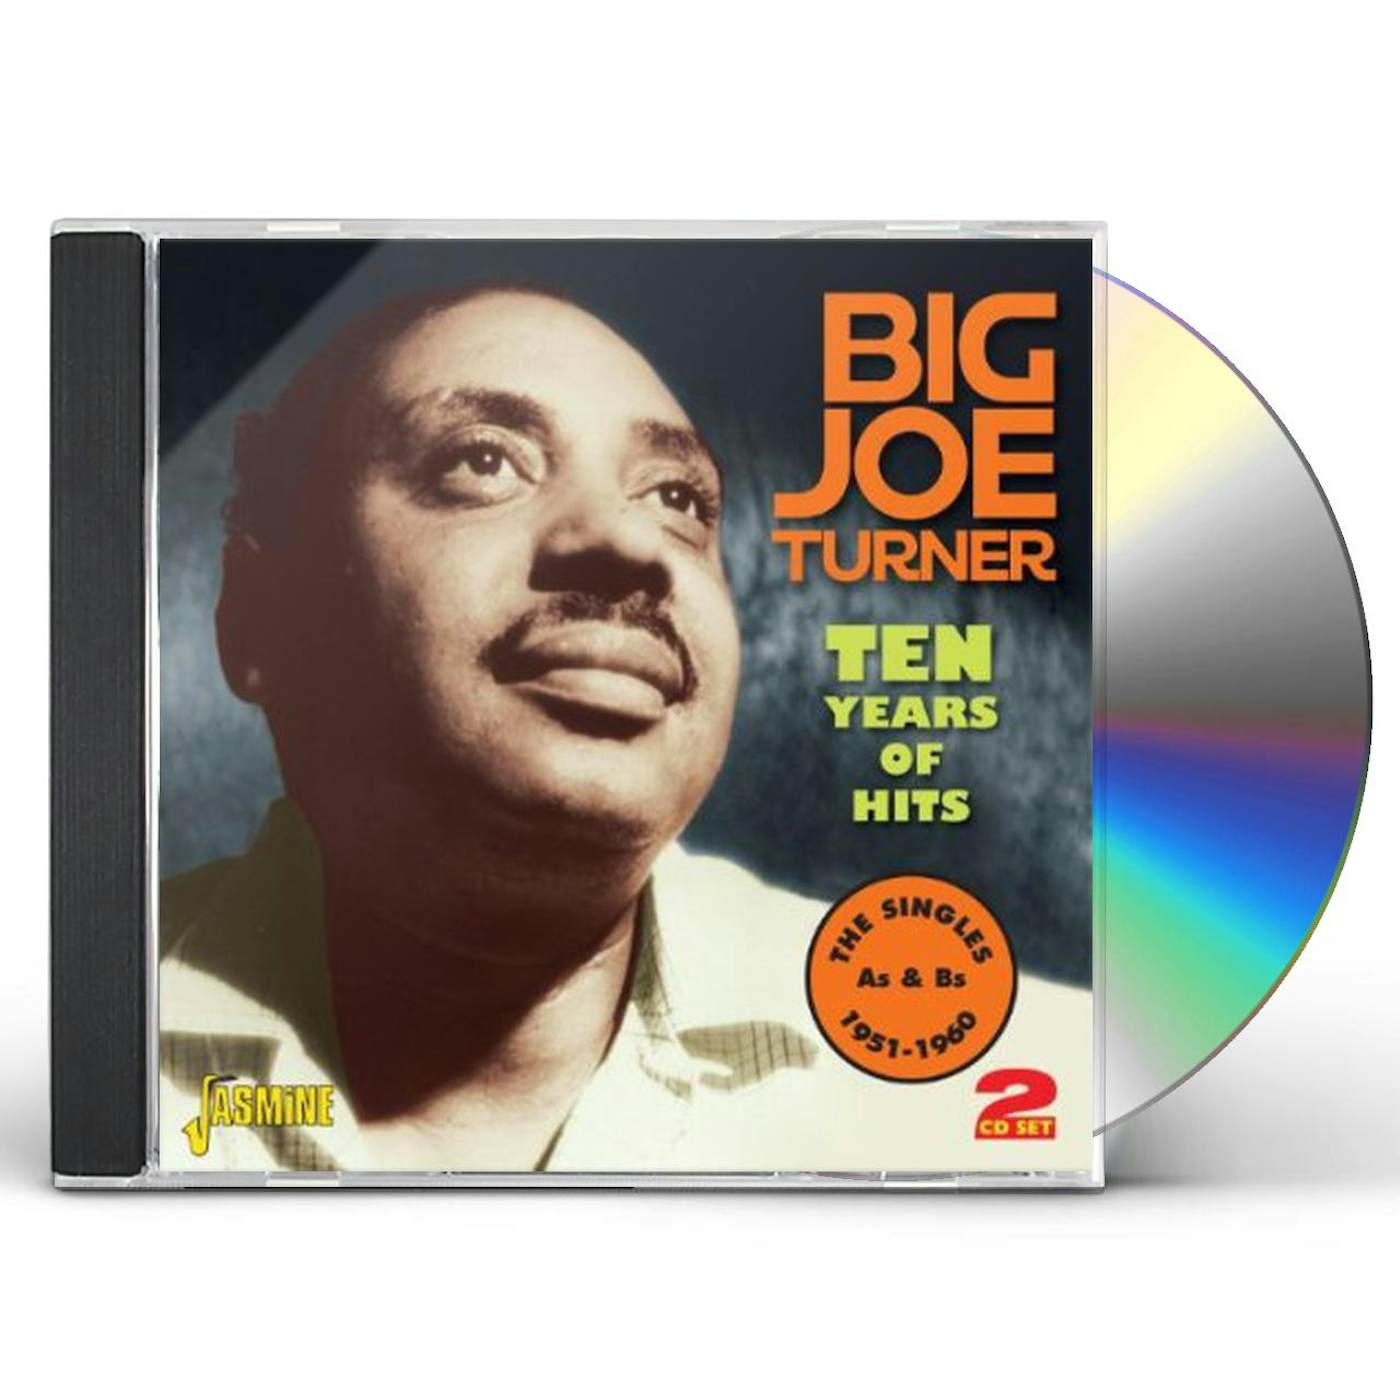 Big Joe Turner 10 YEARS OF HITS CD